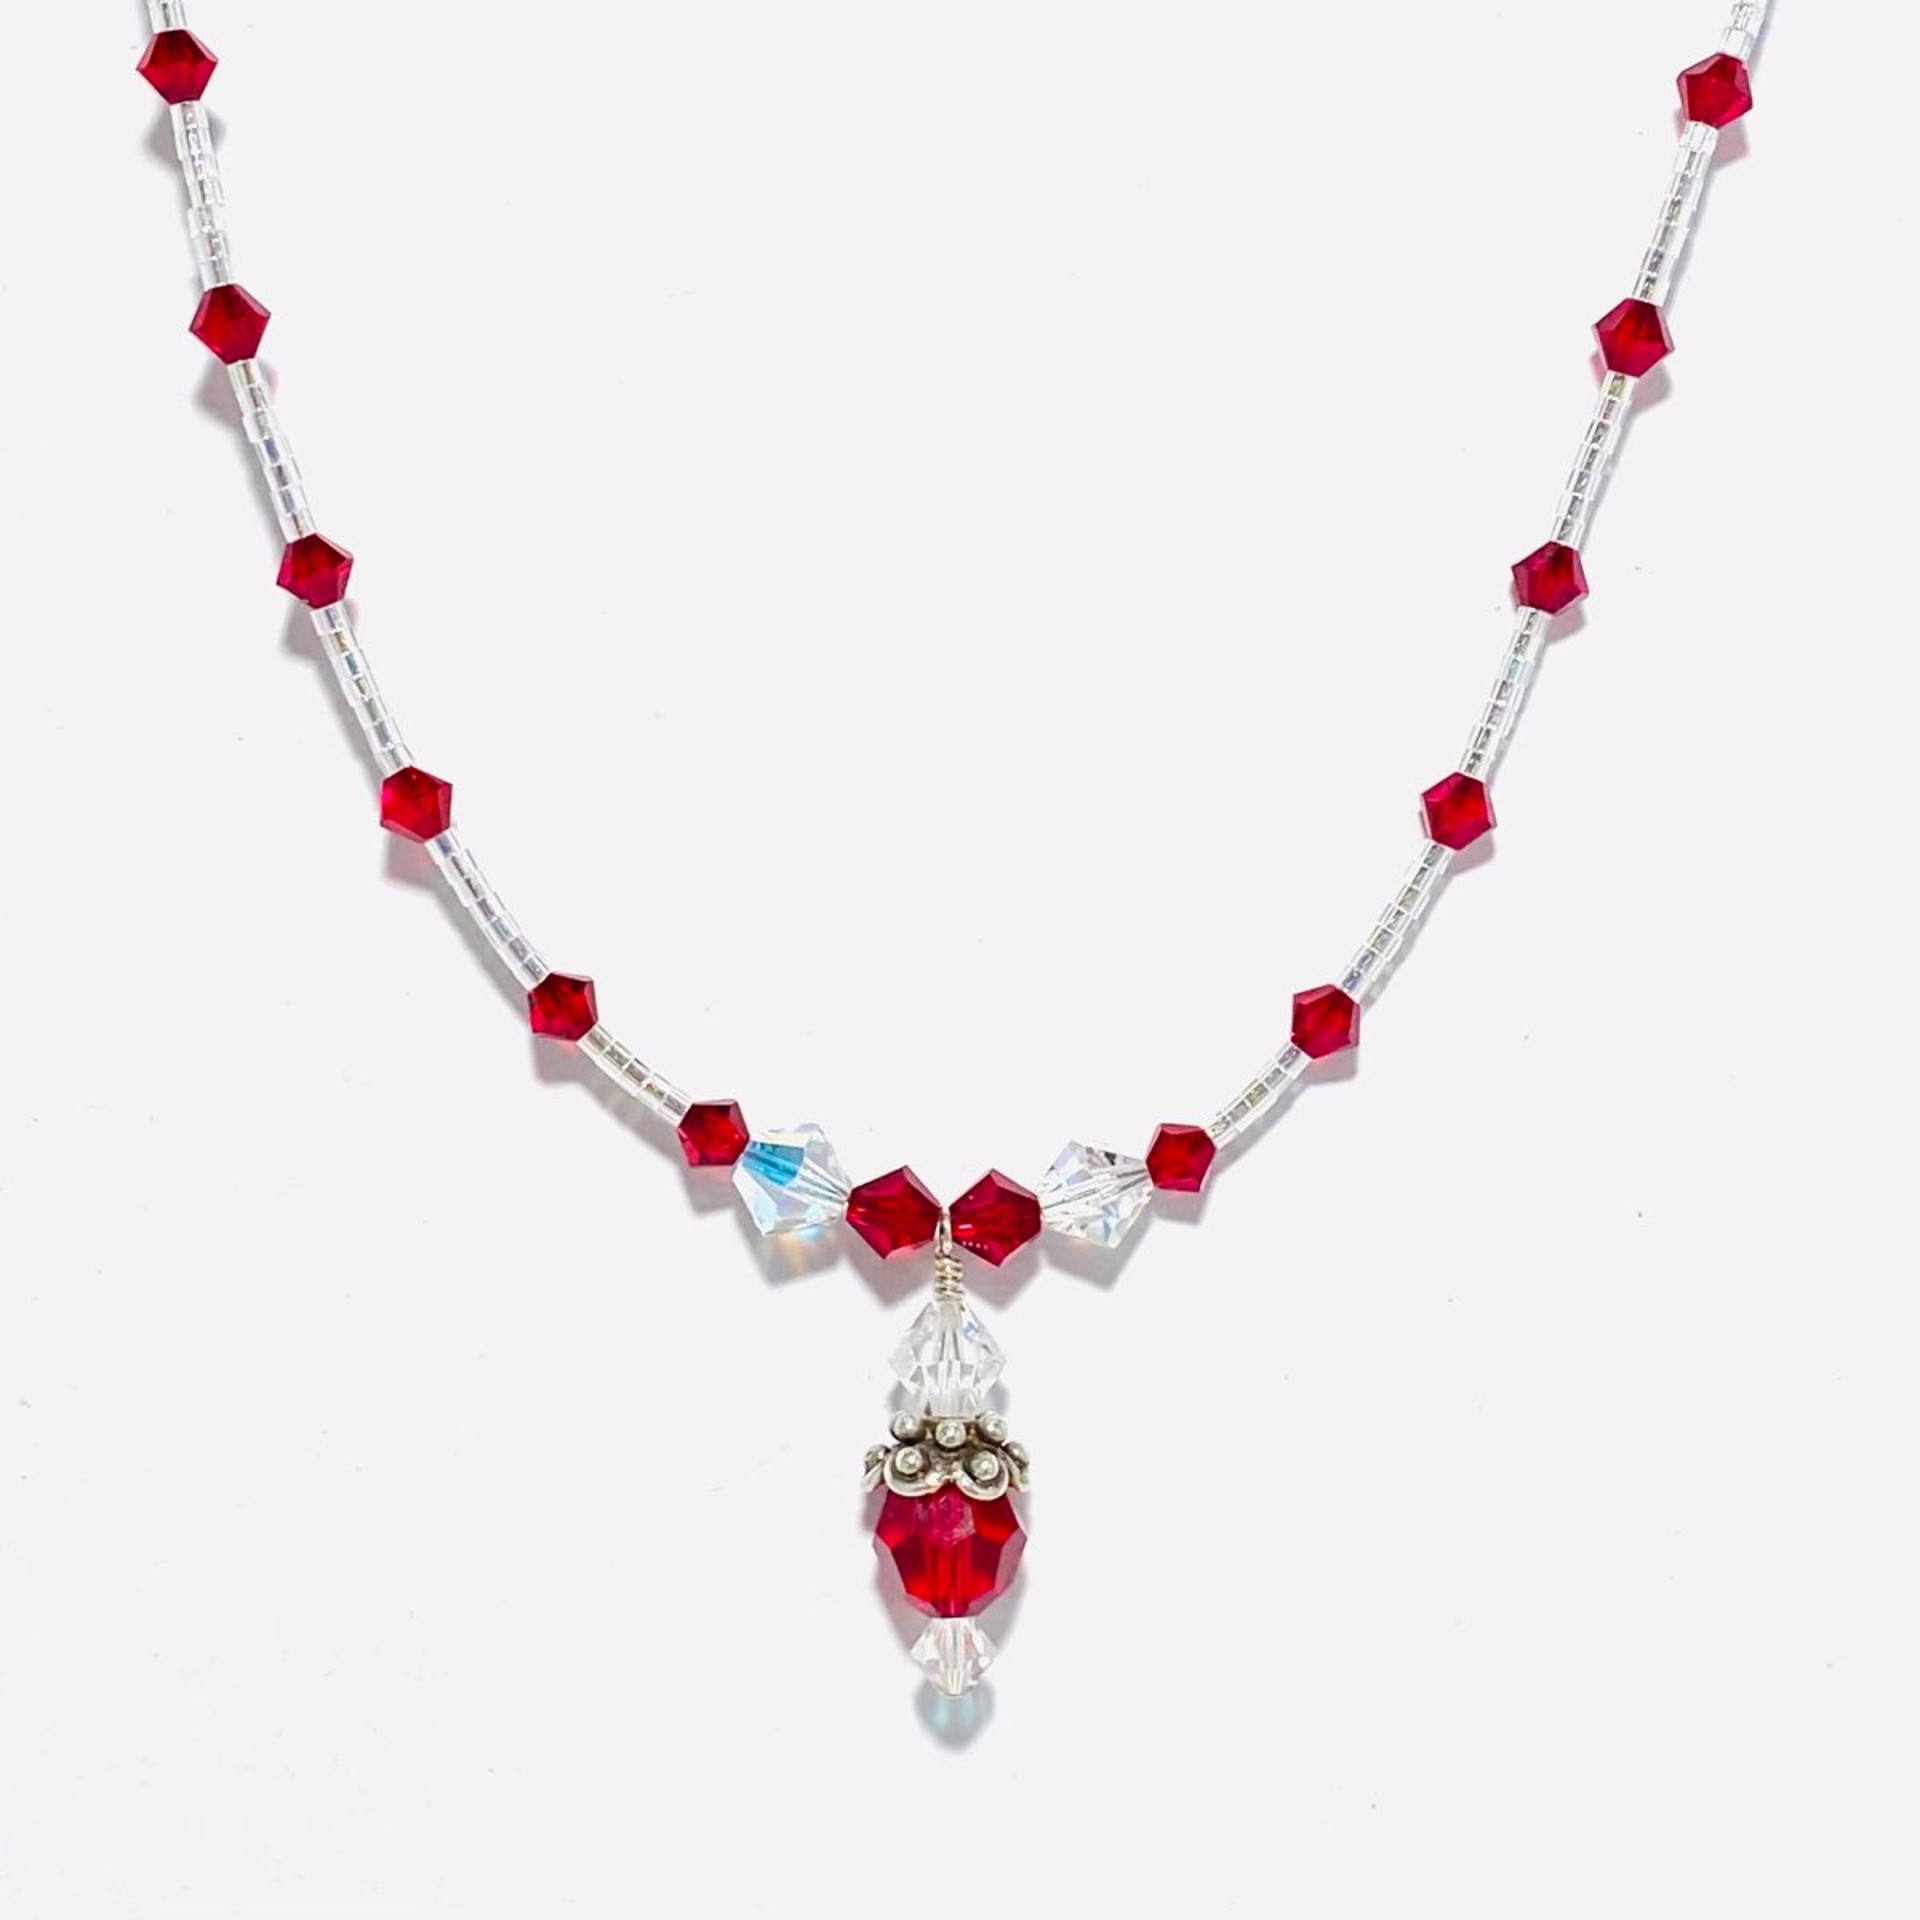 SHOSH22-56 Birthstone Necklace~January Garnet Swarovski Crystals by Shoshannah Weinisch